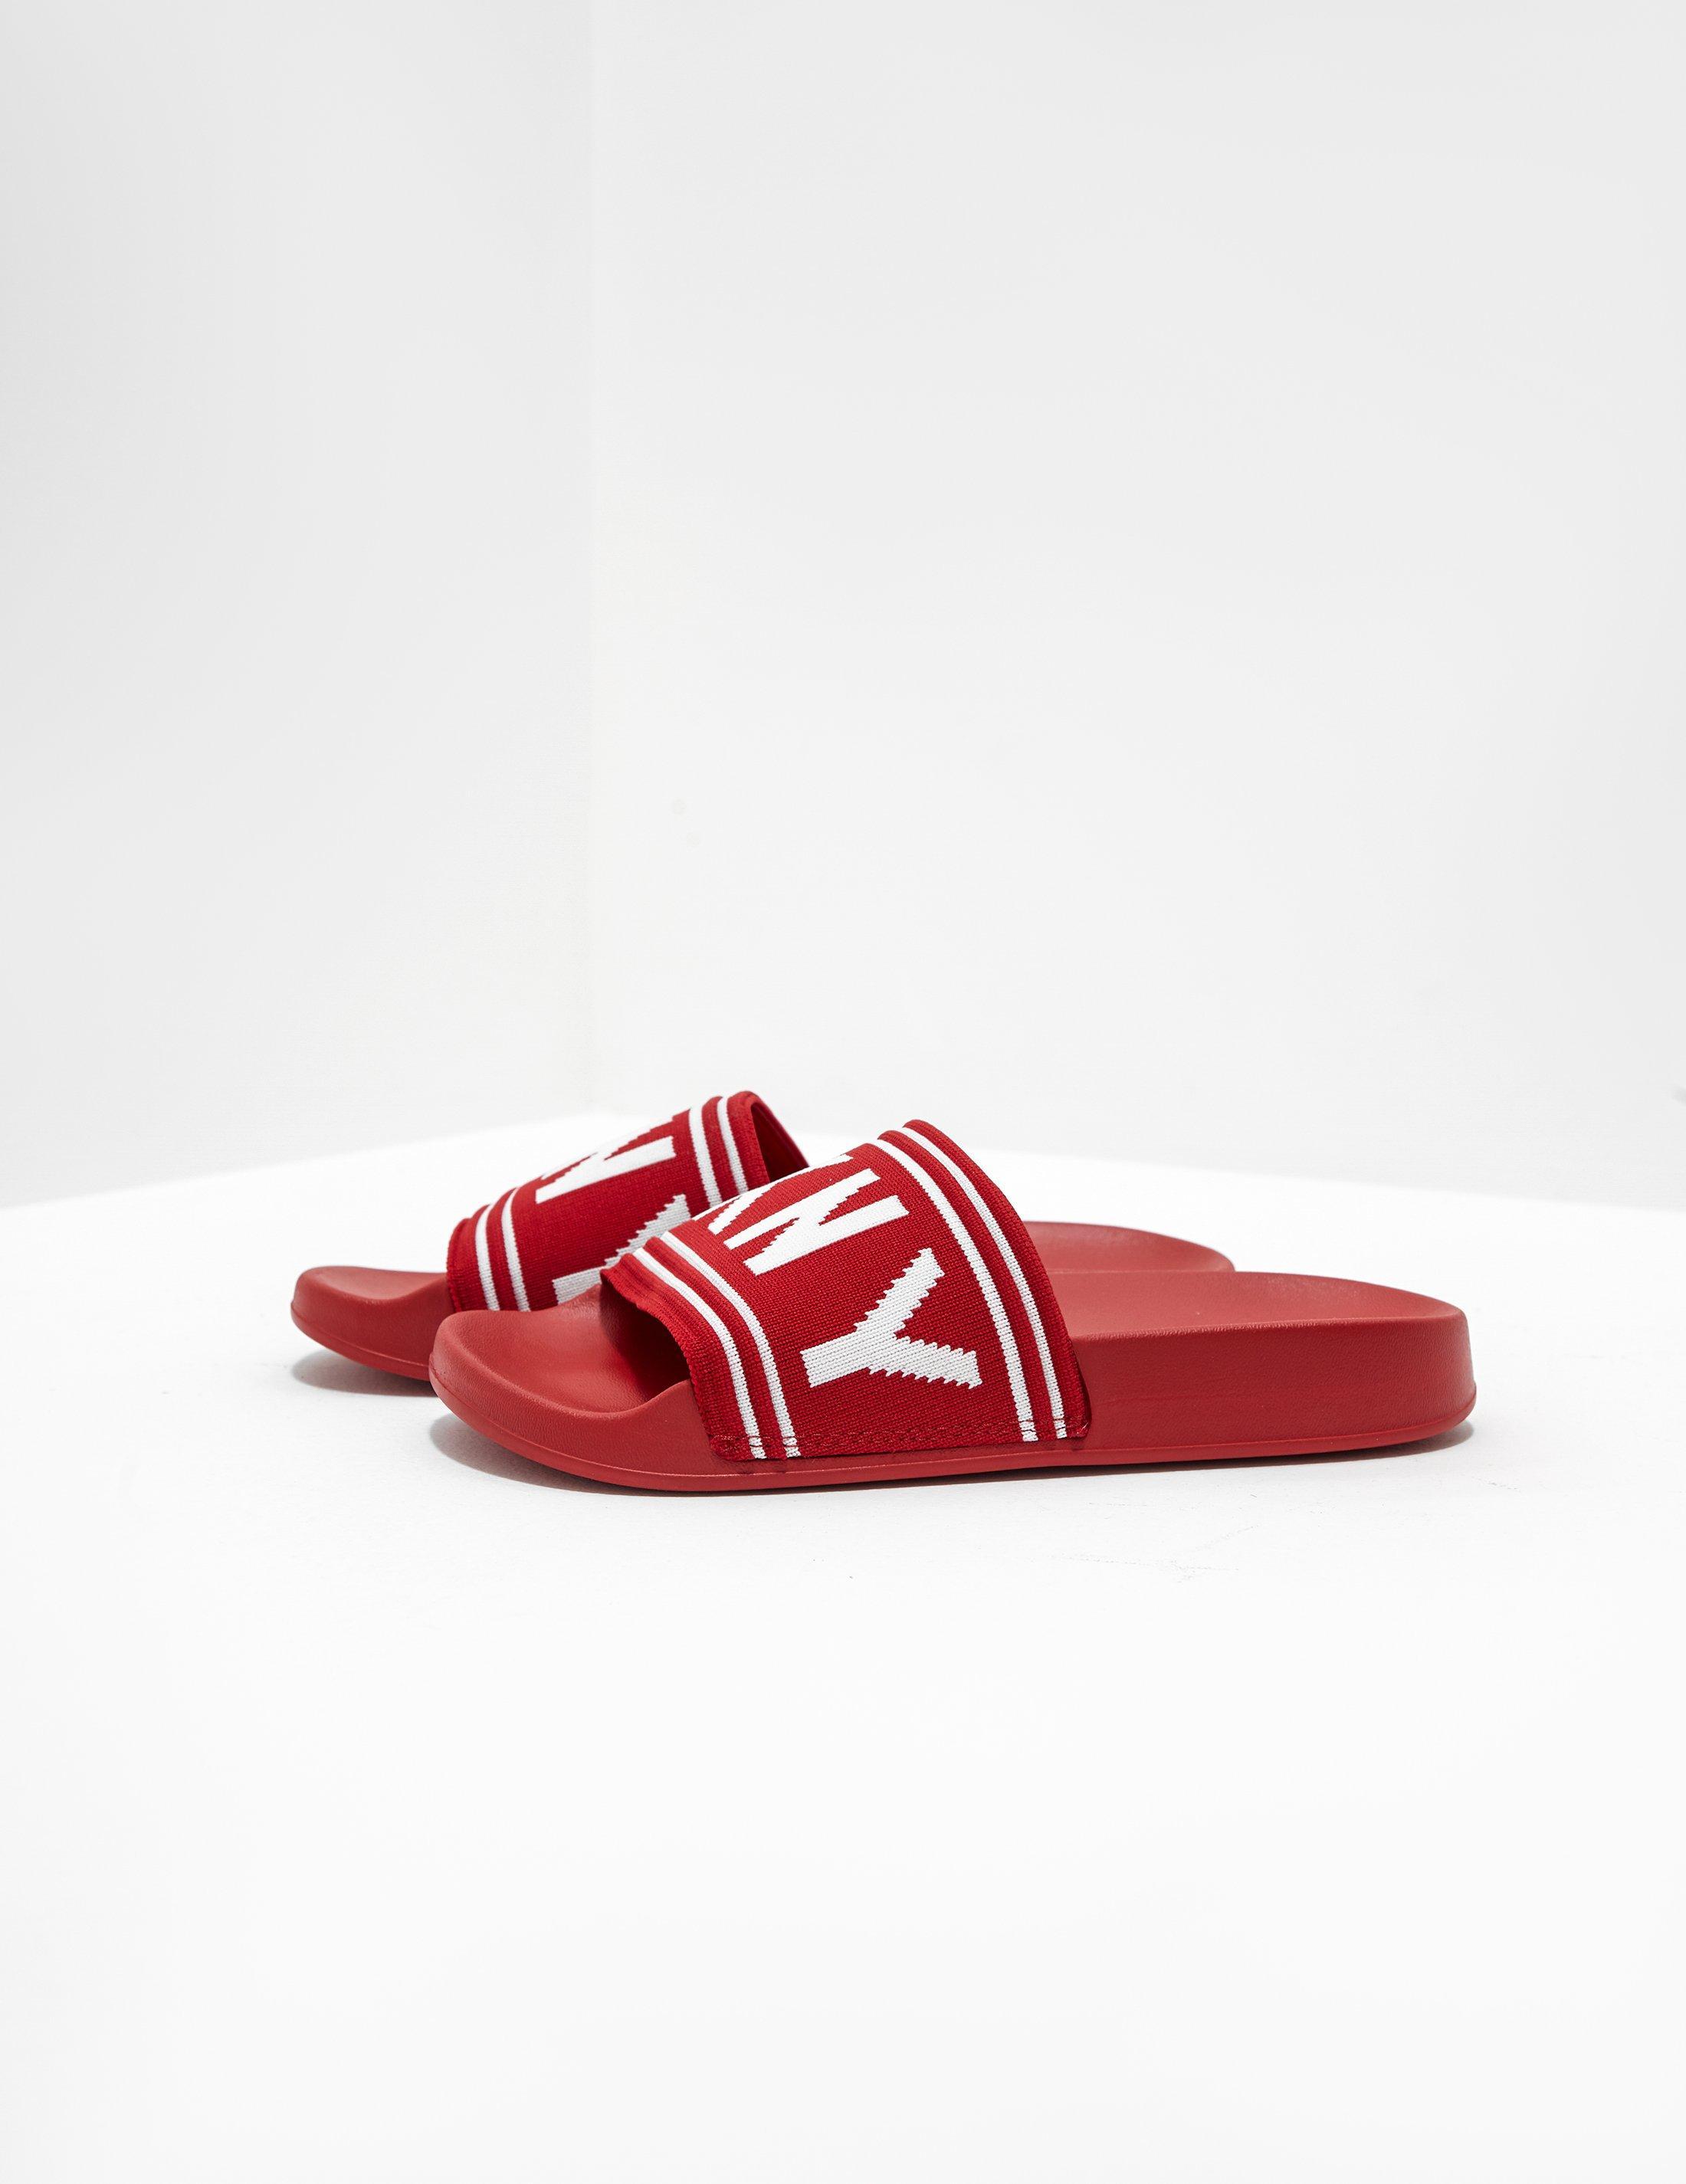 DKNY Rubber Zora Slides Red - Lyst